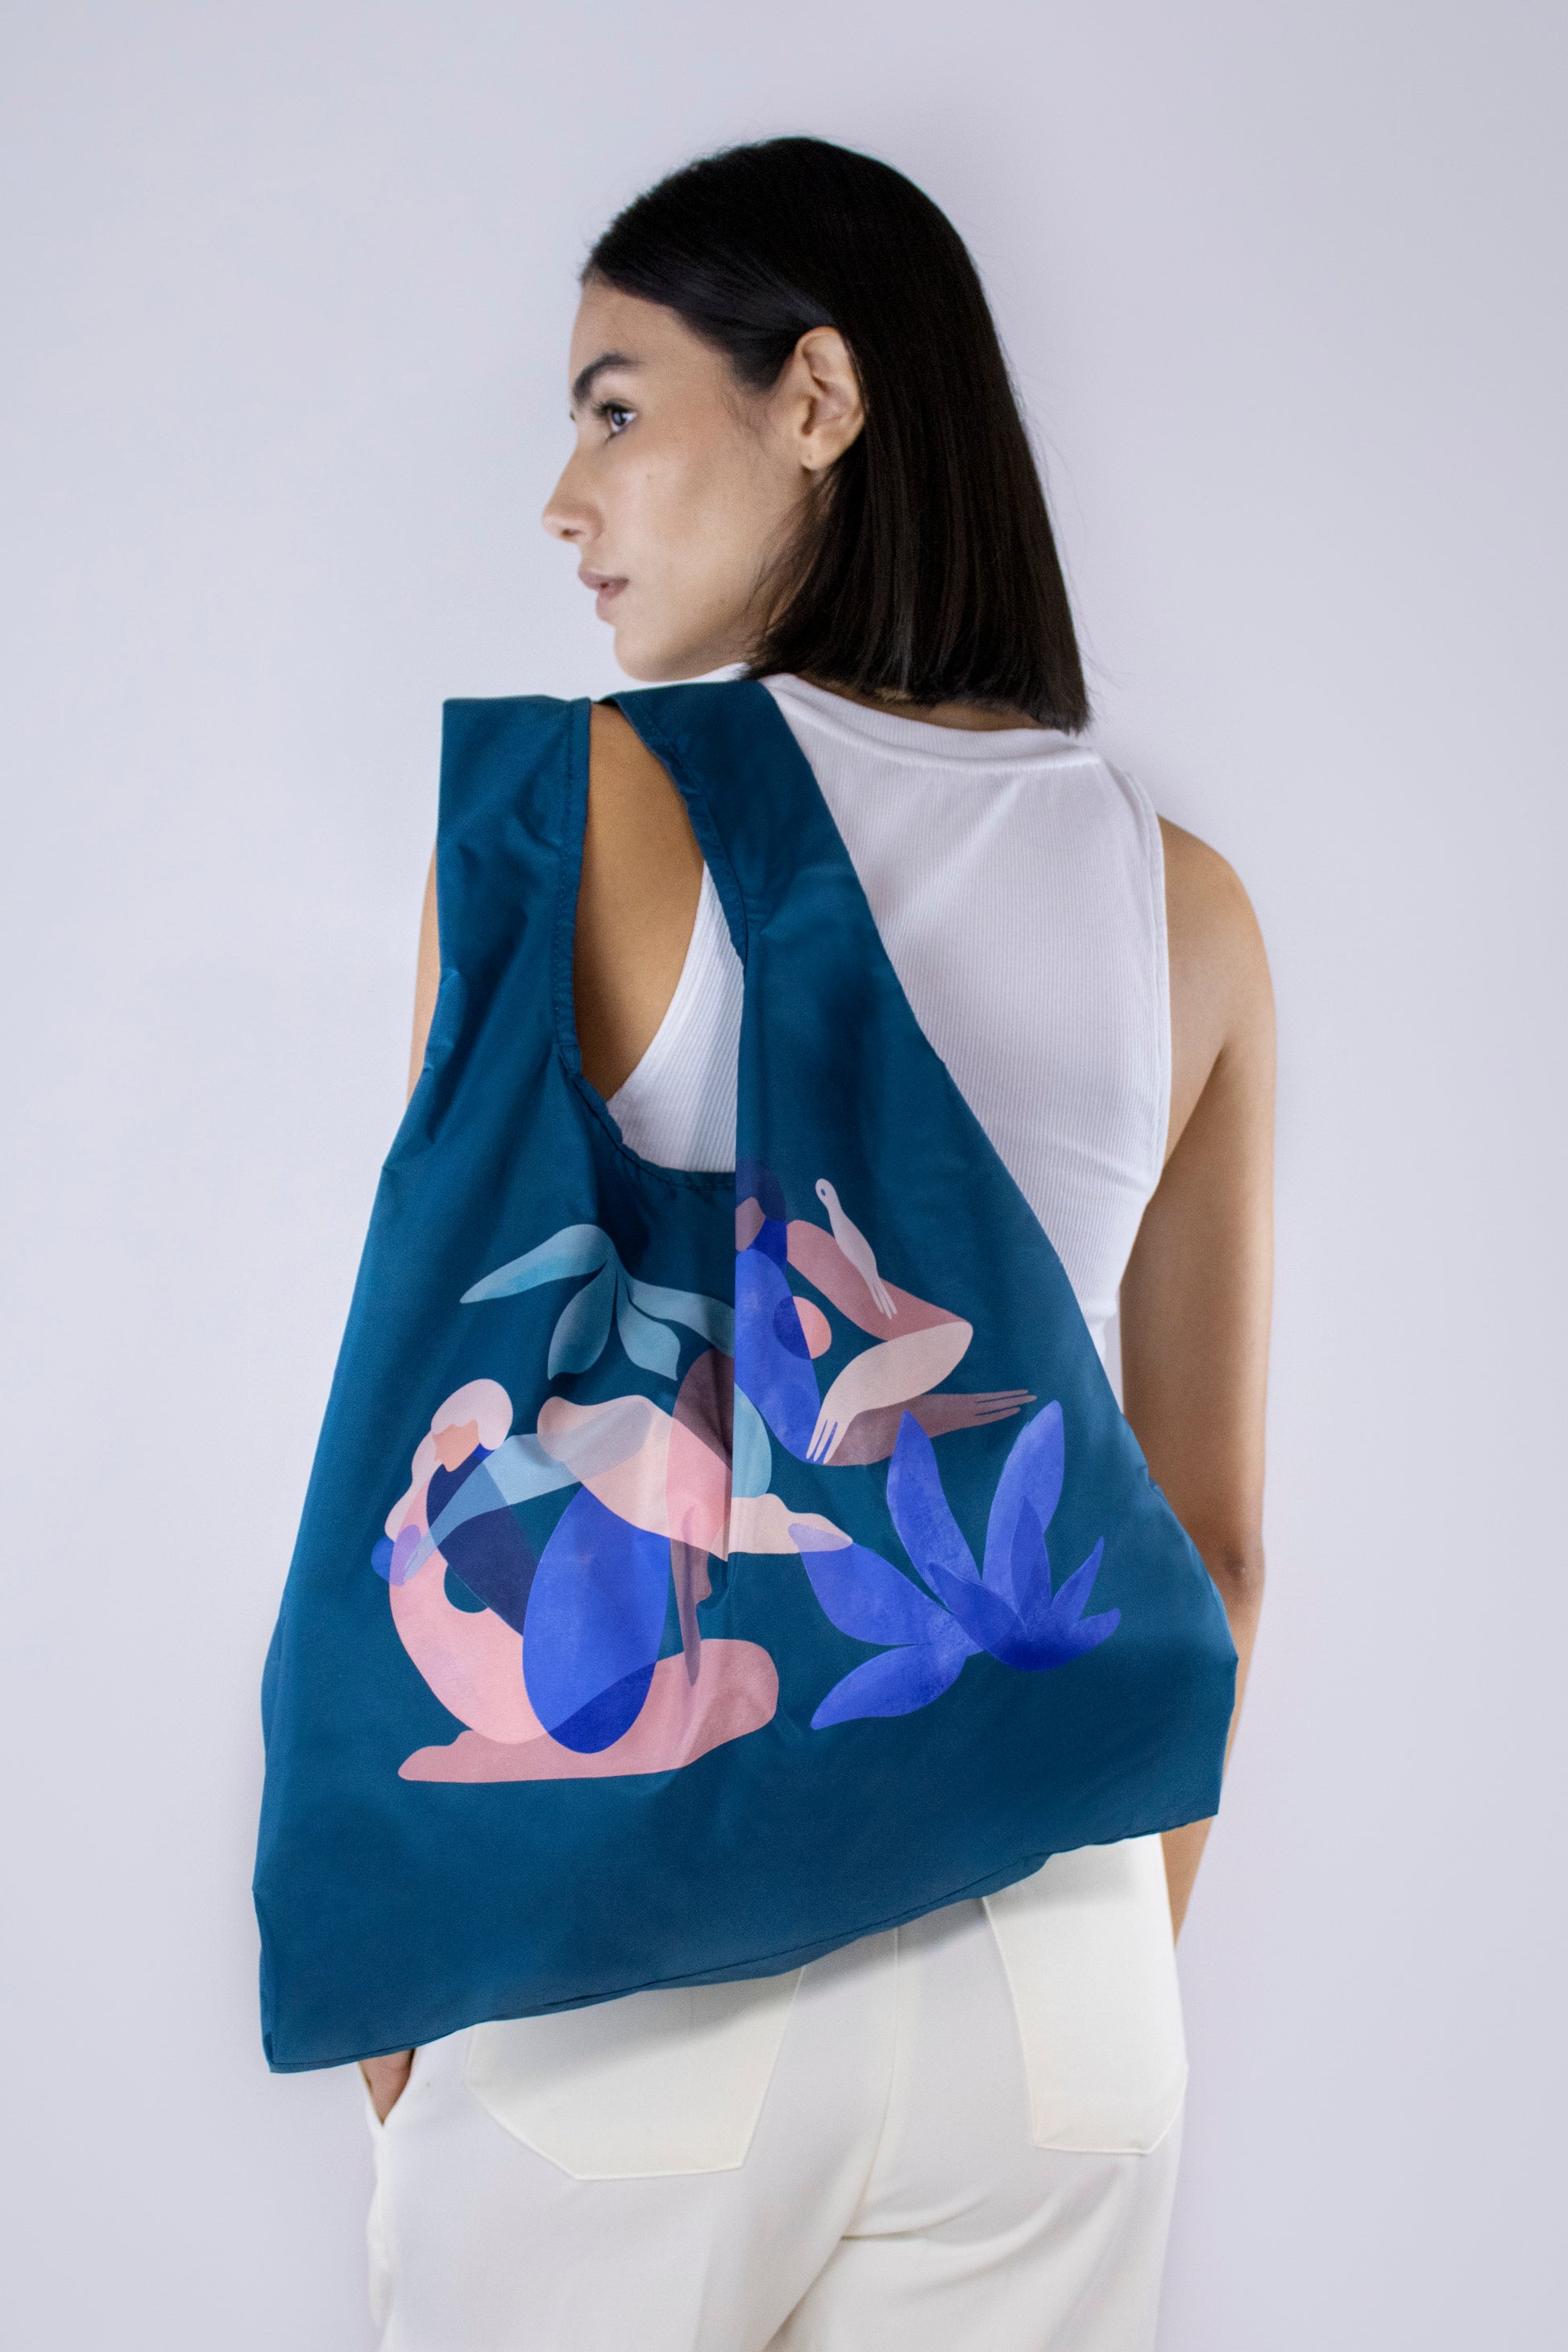 Kind Bag Recycled Plastic Reusable Bag Maggie Stephenson Spellbinding Singapore